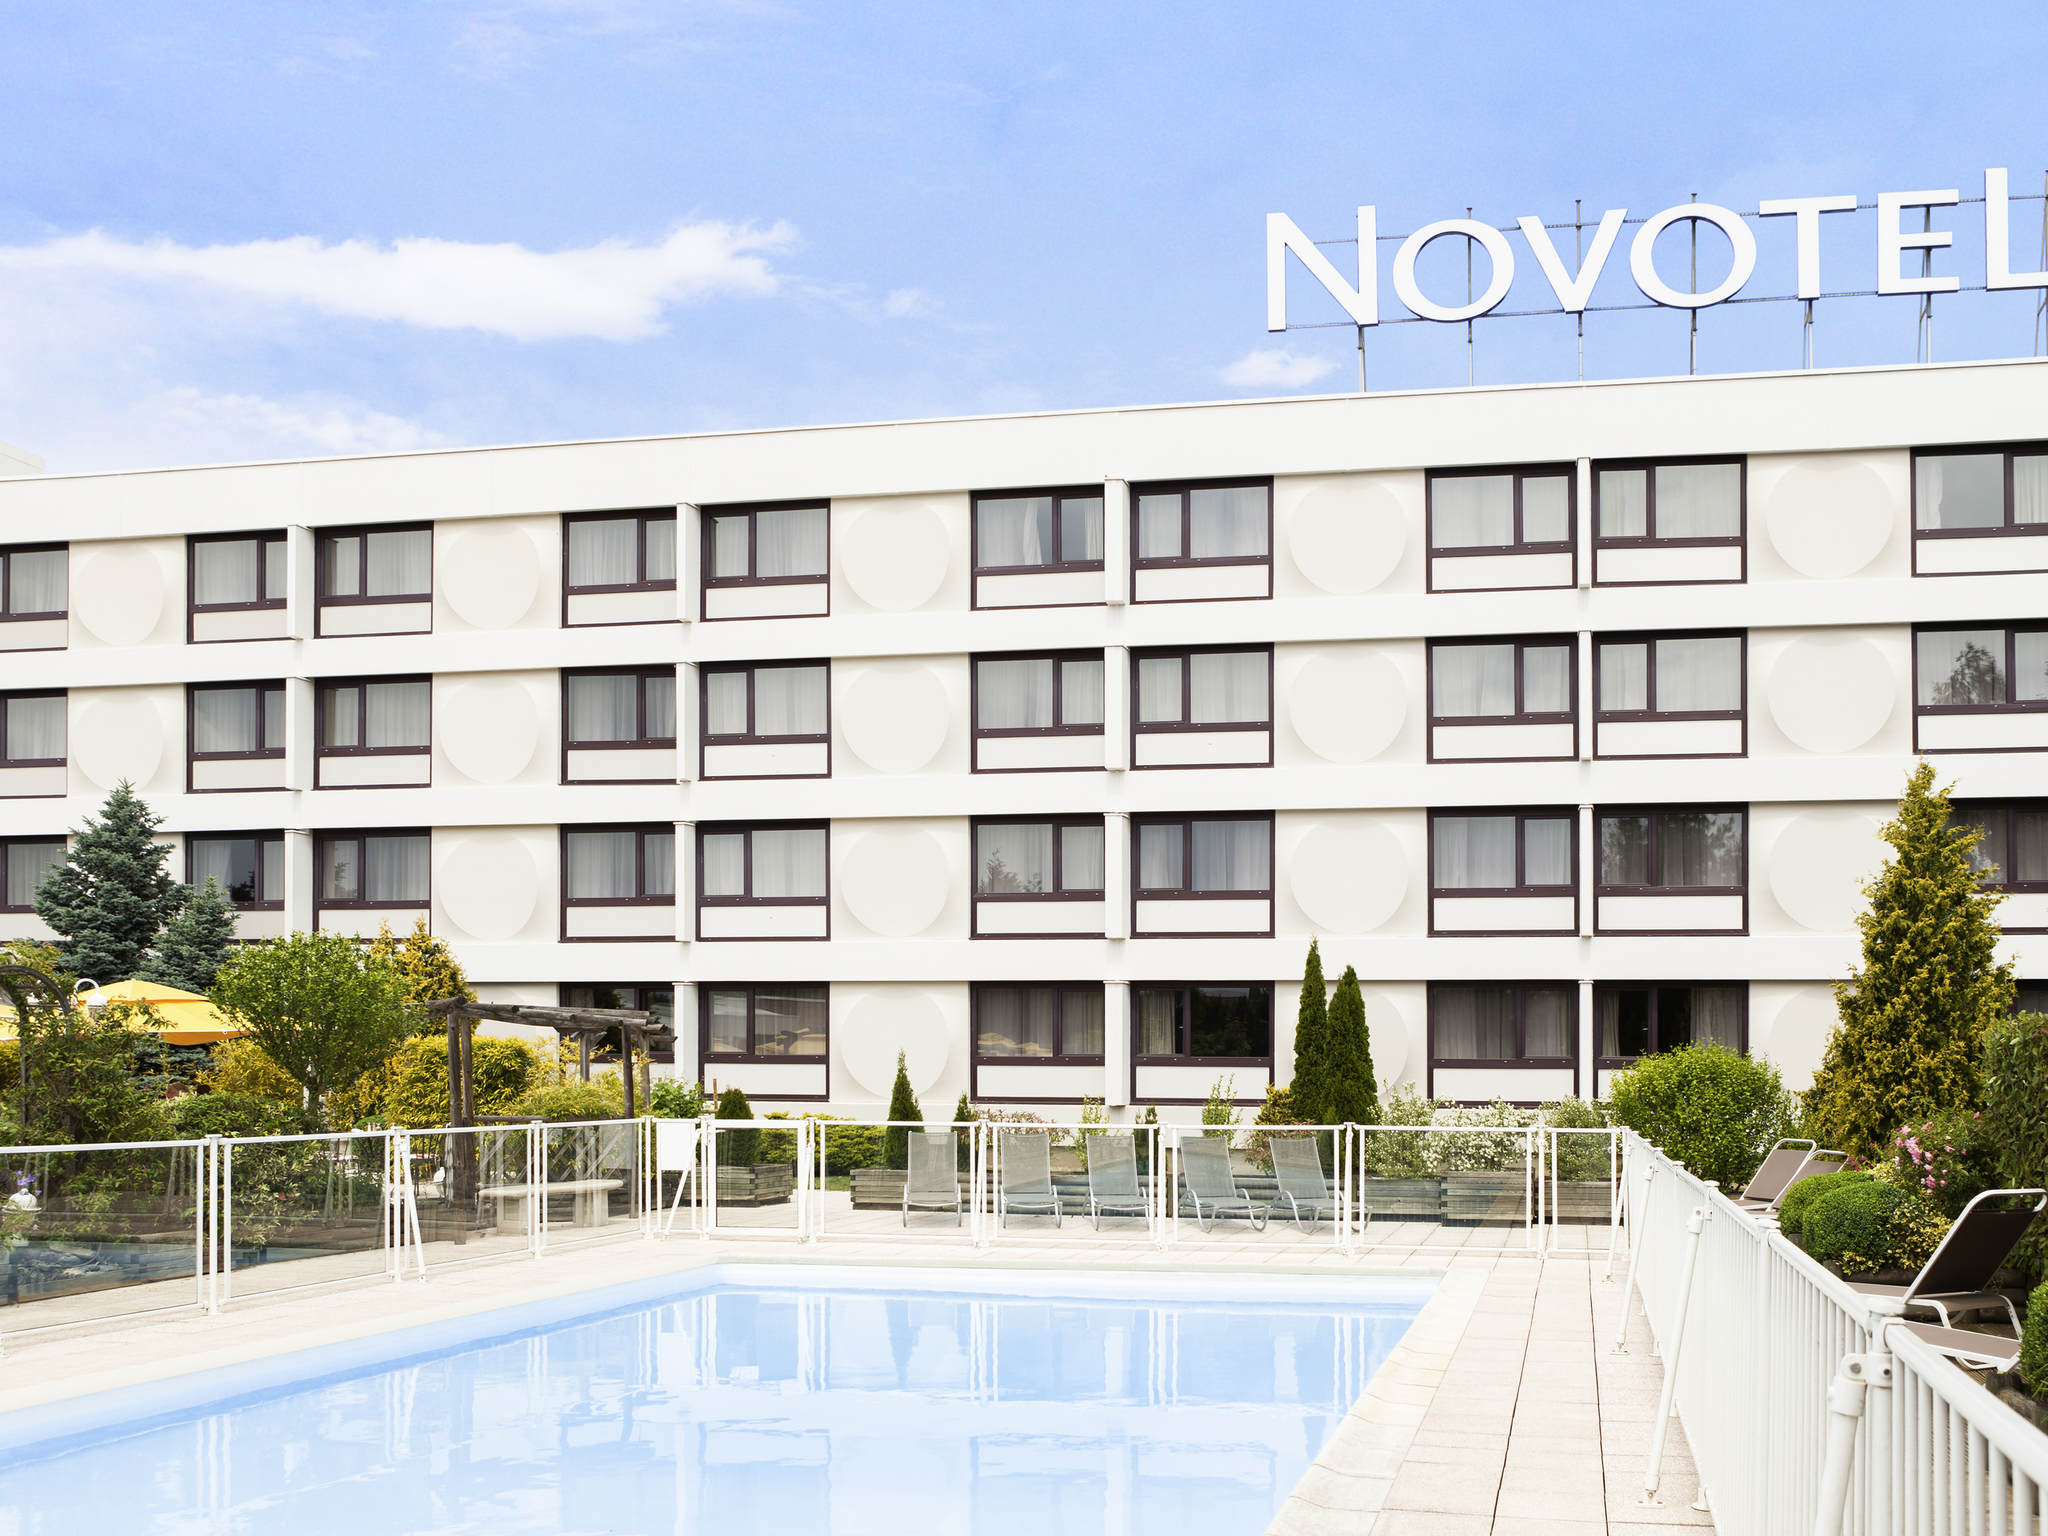 Hôtel À Laxou - Novotel Nancy encequiconcerne Piscine Ronde Nancy